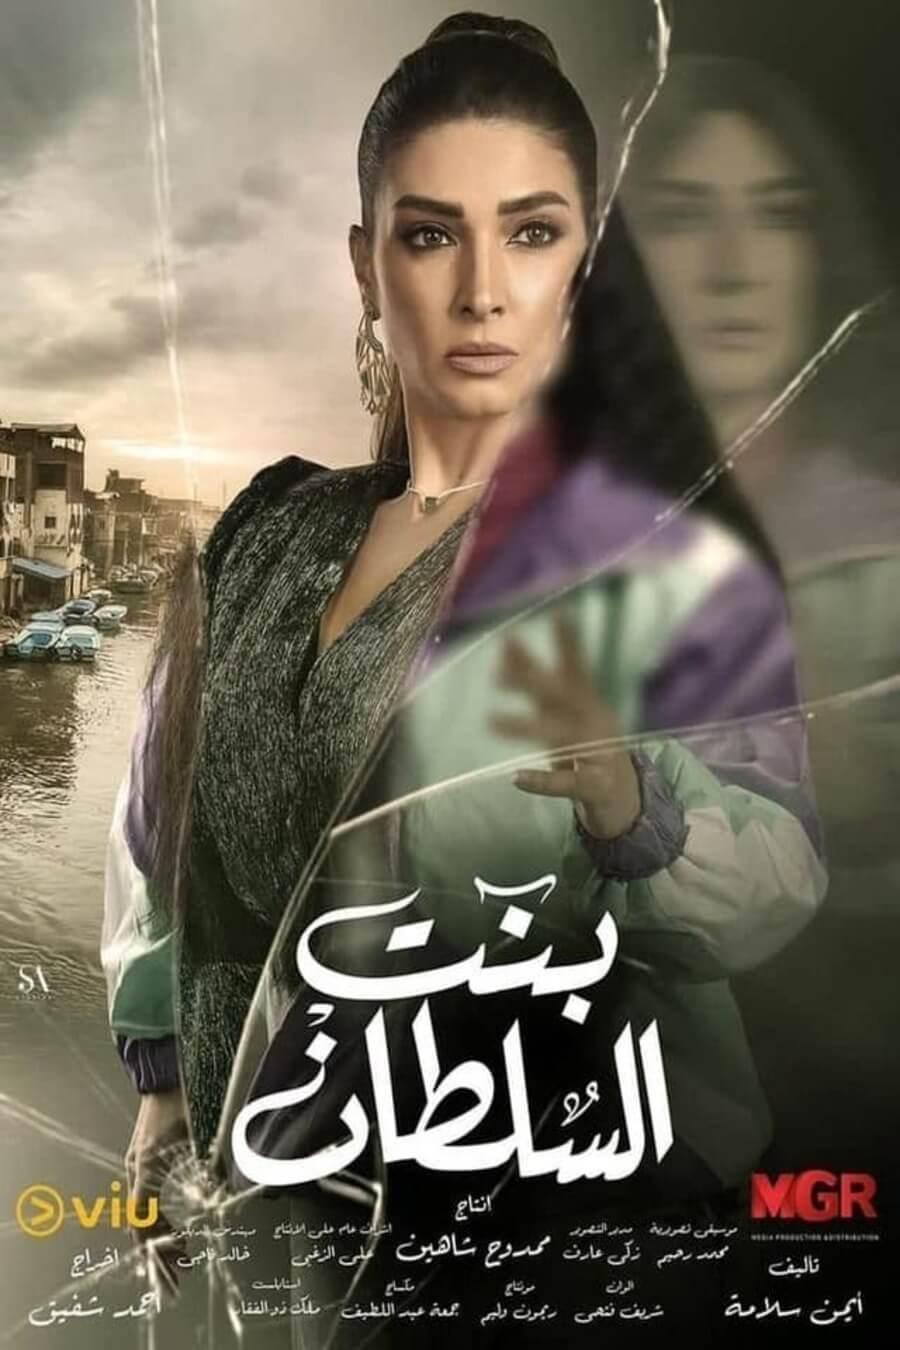 TV ratings for Bint El Sultan (بنت السلطان) in Malaysia. viu TV series